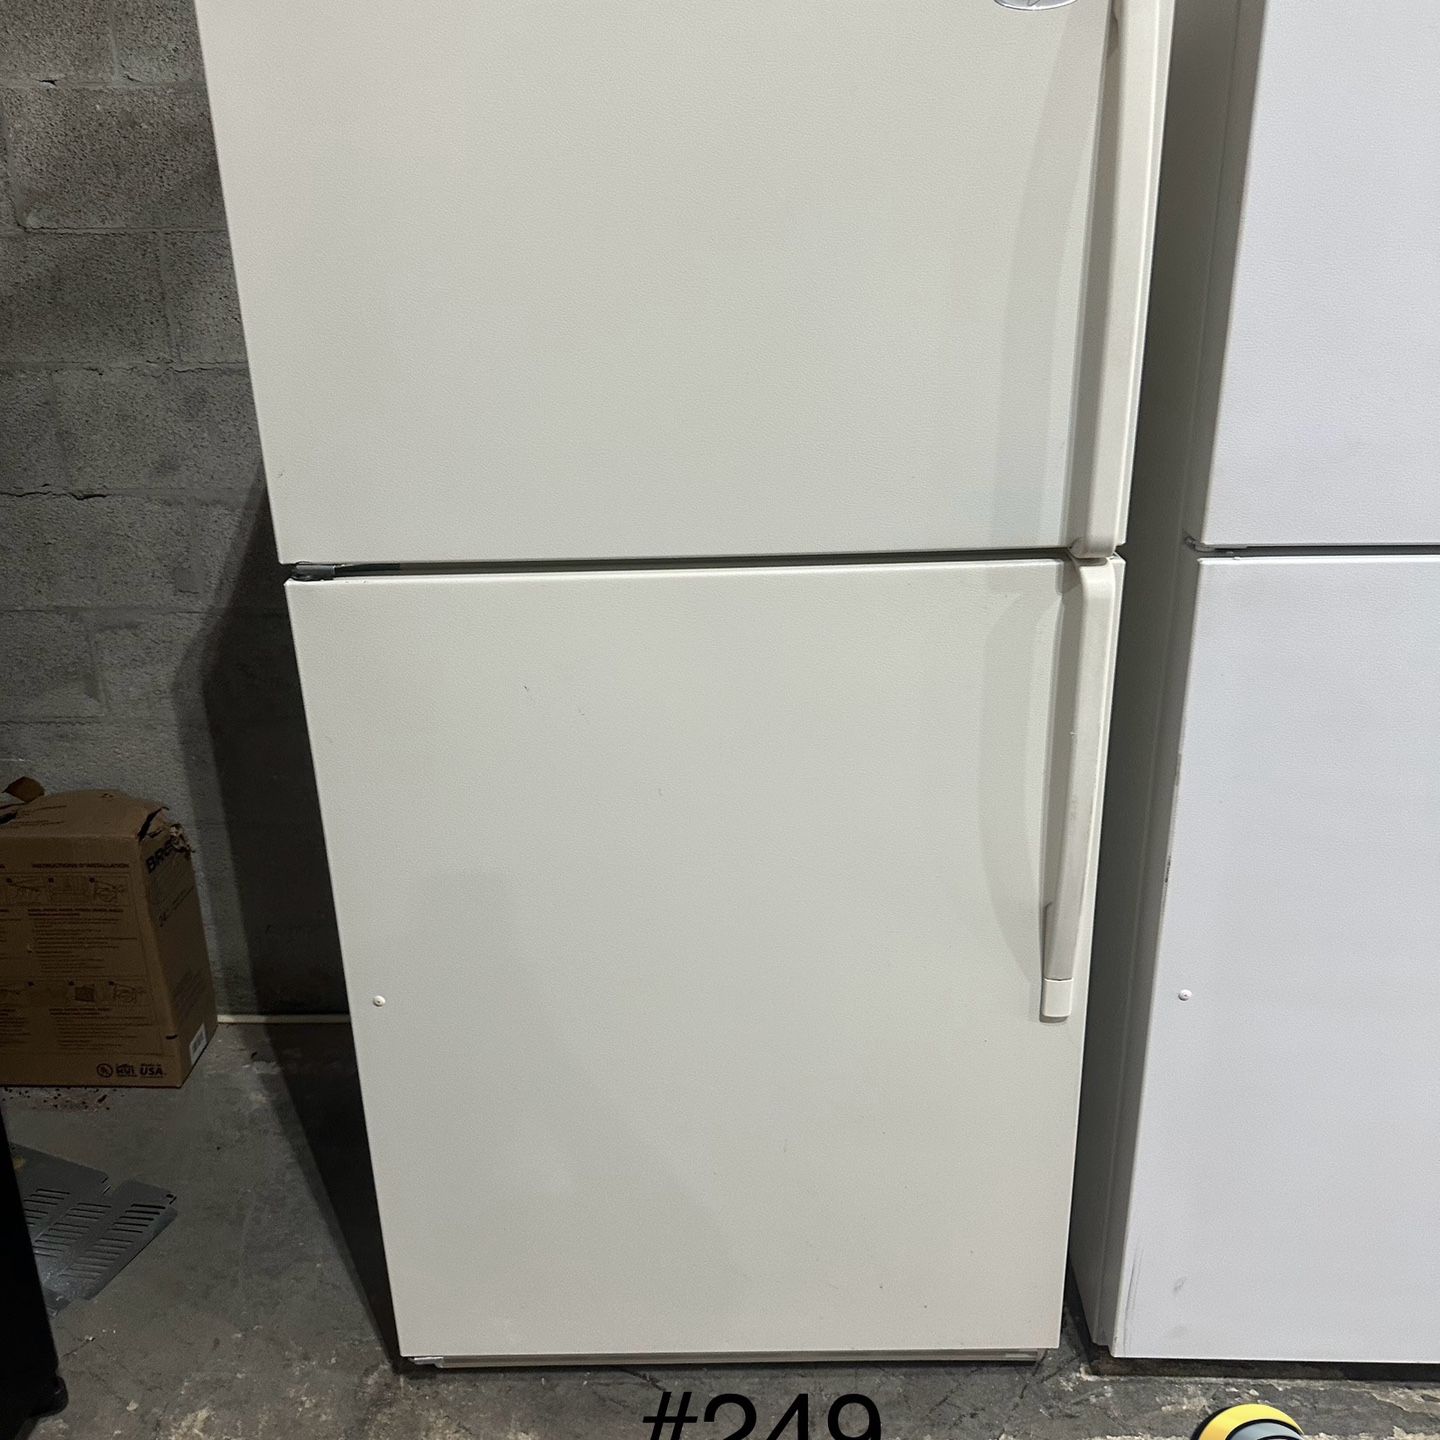 Whirlpool Refrigerator Top And Bottom (#249)